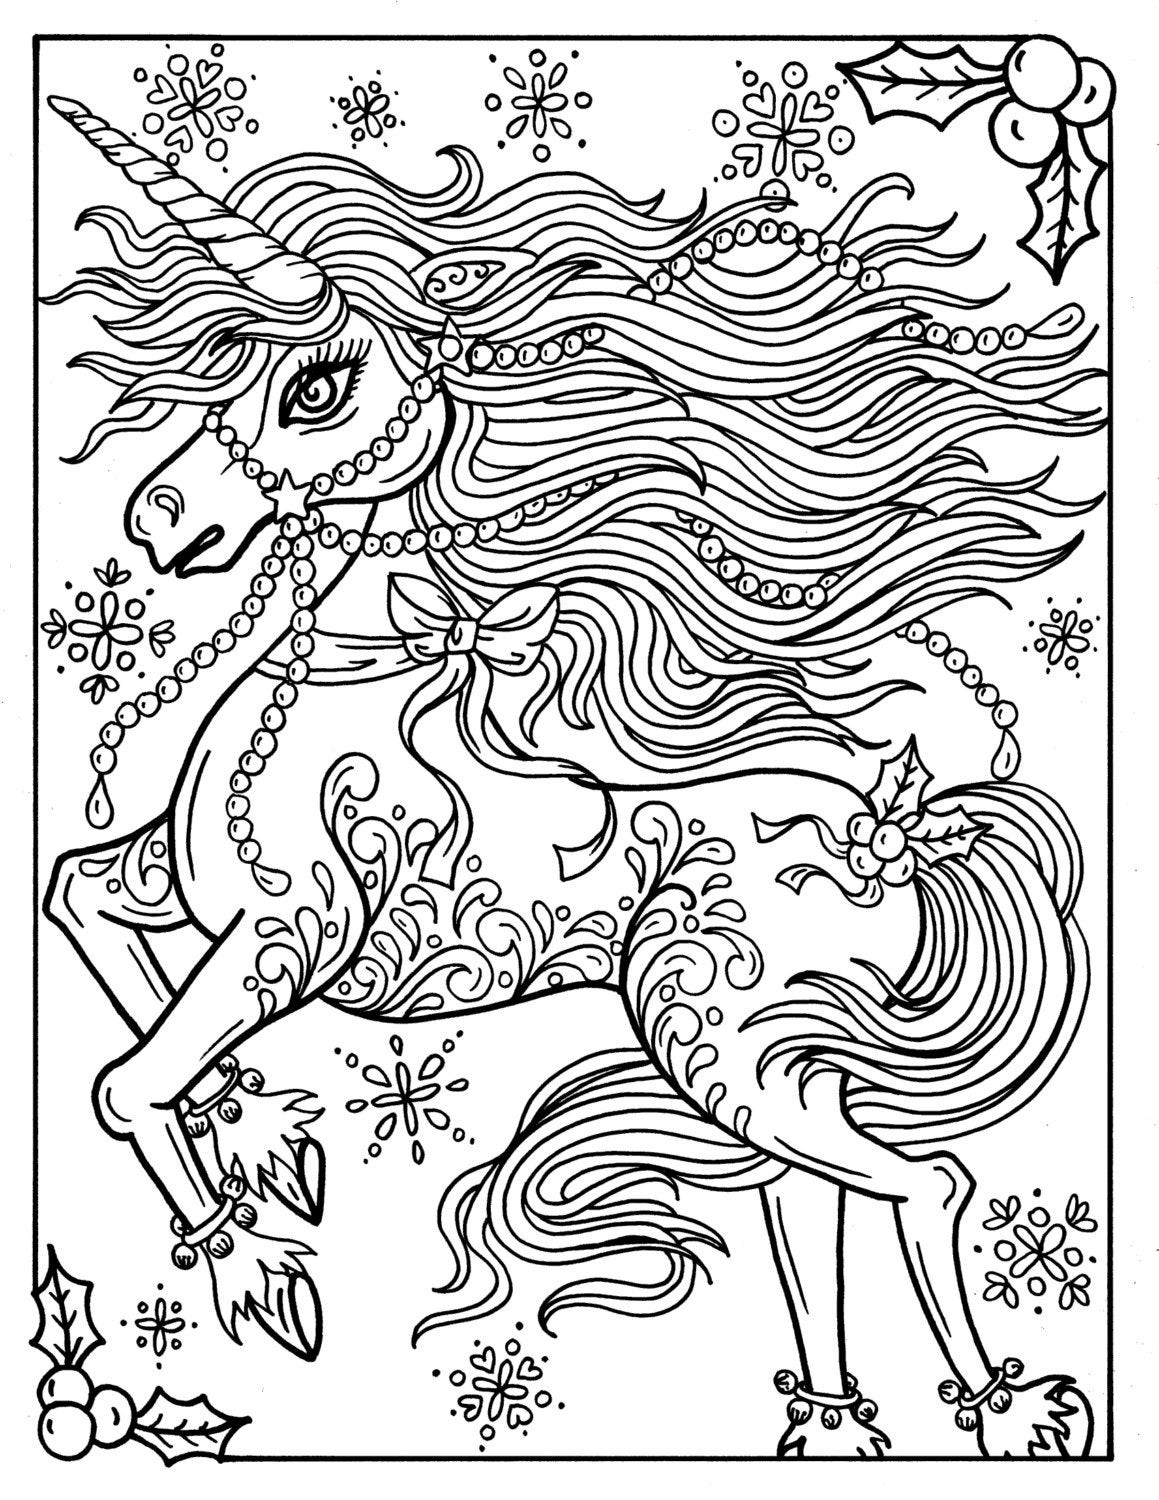 Unicorn Adult Coloring Book
 Christmas Unicorn Adult Coloring page Coloring book